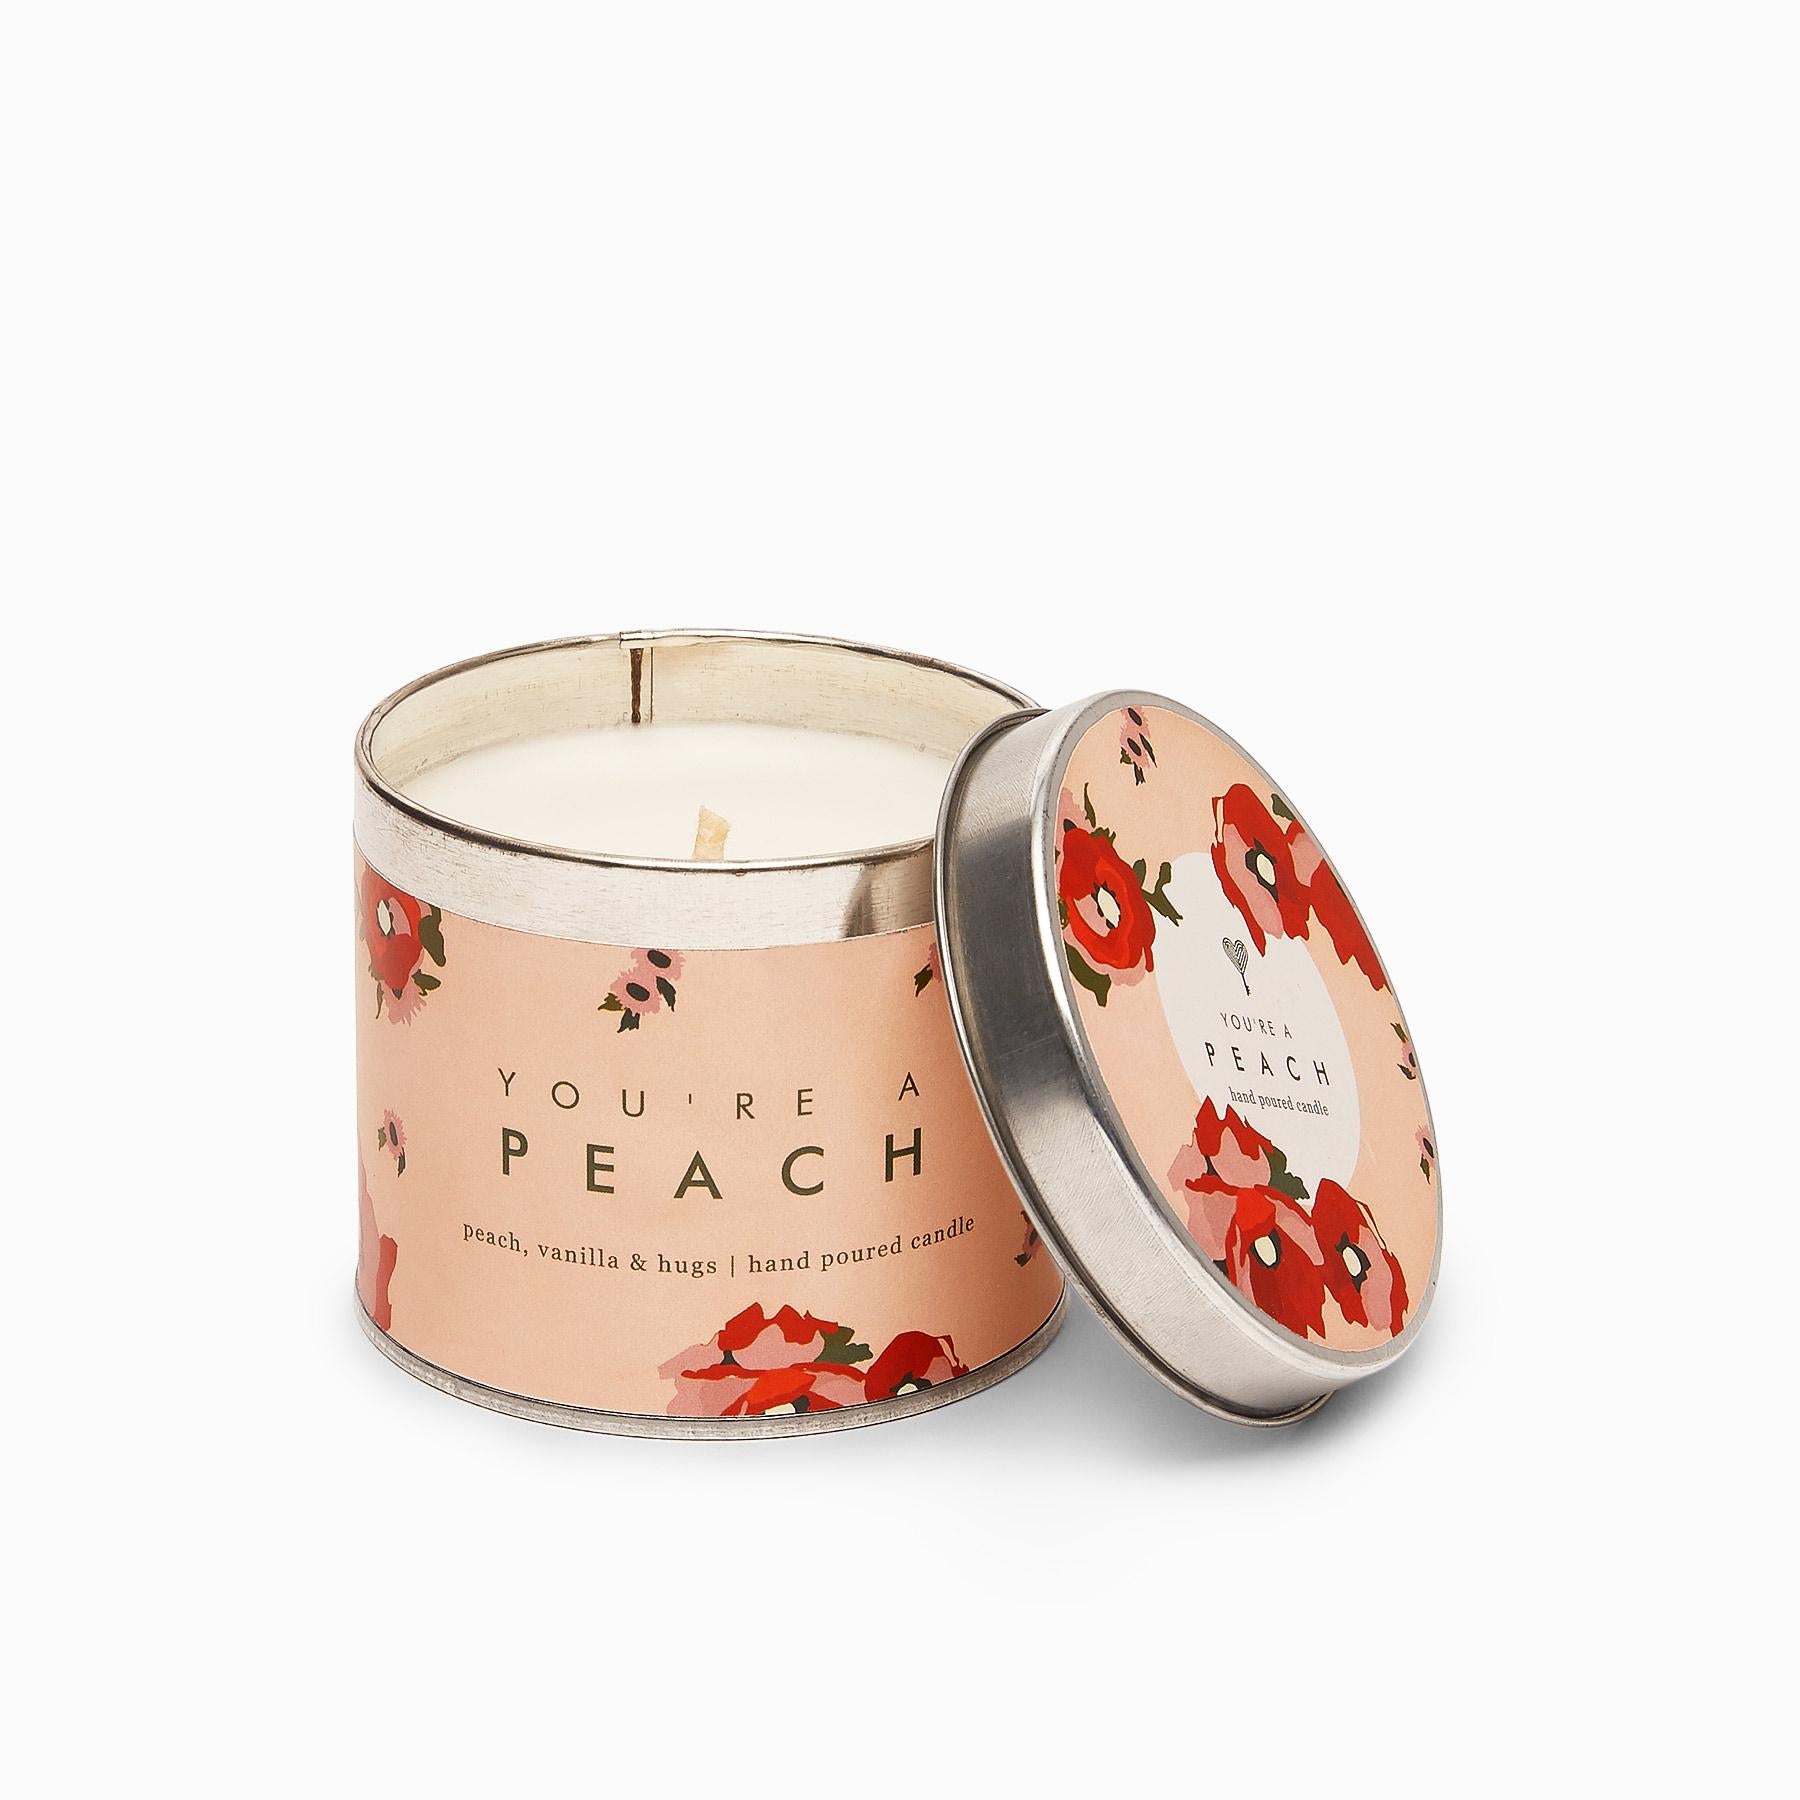 Peach Candle Tin